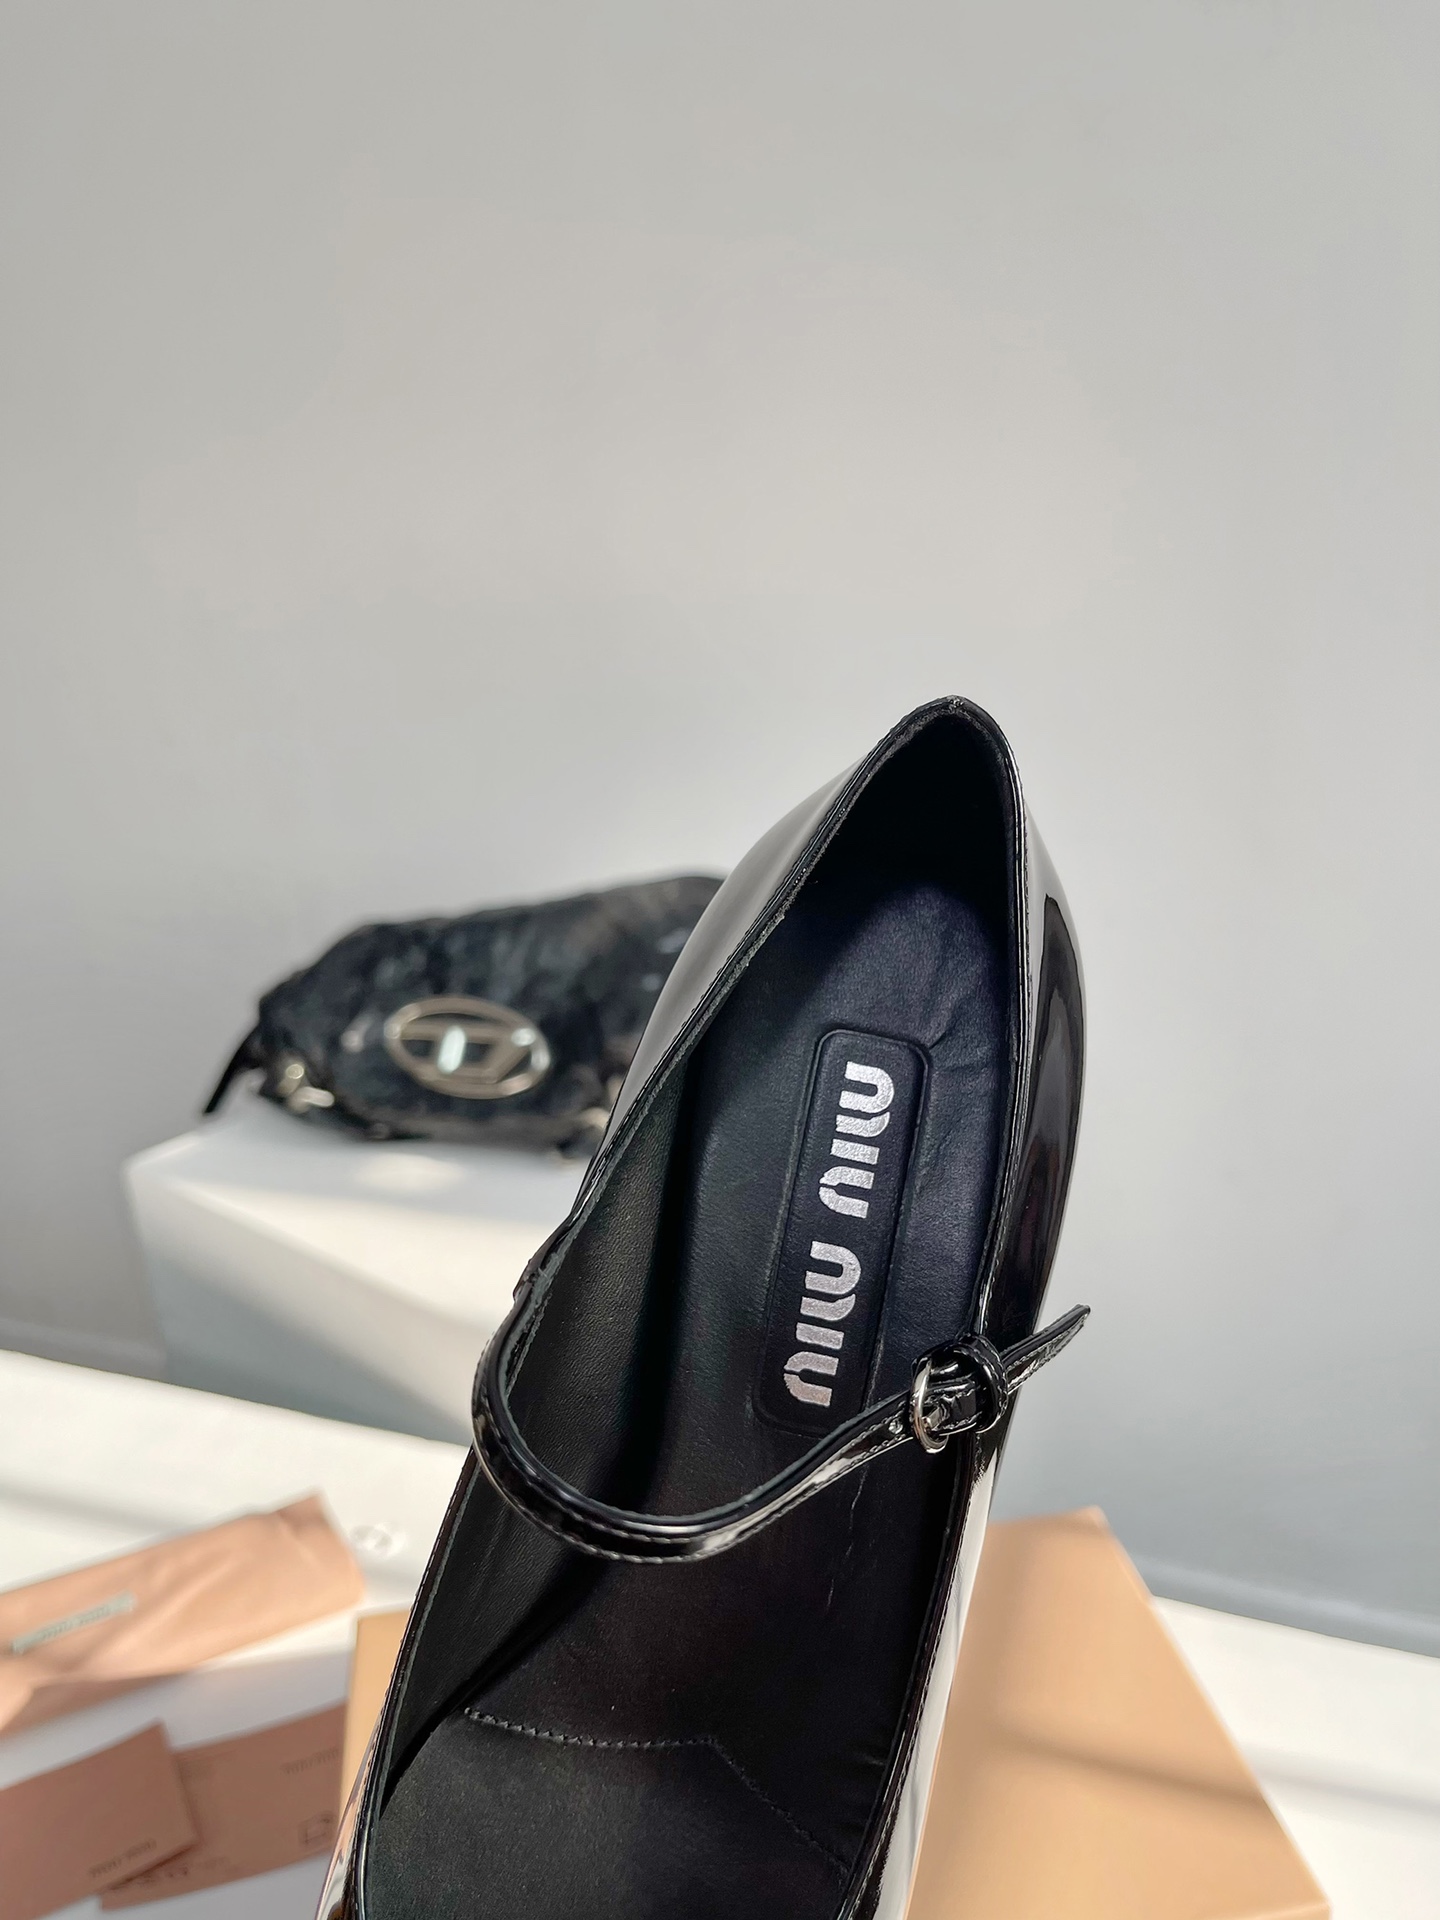 MiuMiu新款平底玛丽珍鞋非常低调的一款单鞋乖巧减龄上脚显腿长又高级舒适度也做到完美日常穿着超级合适穿